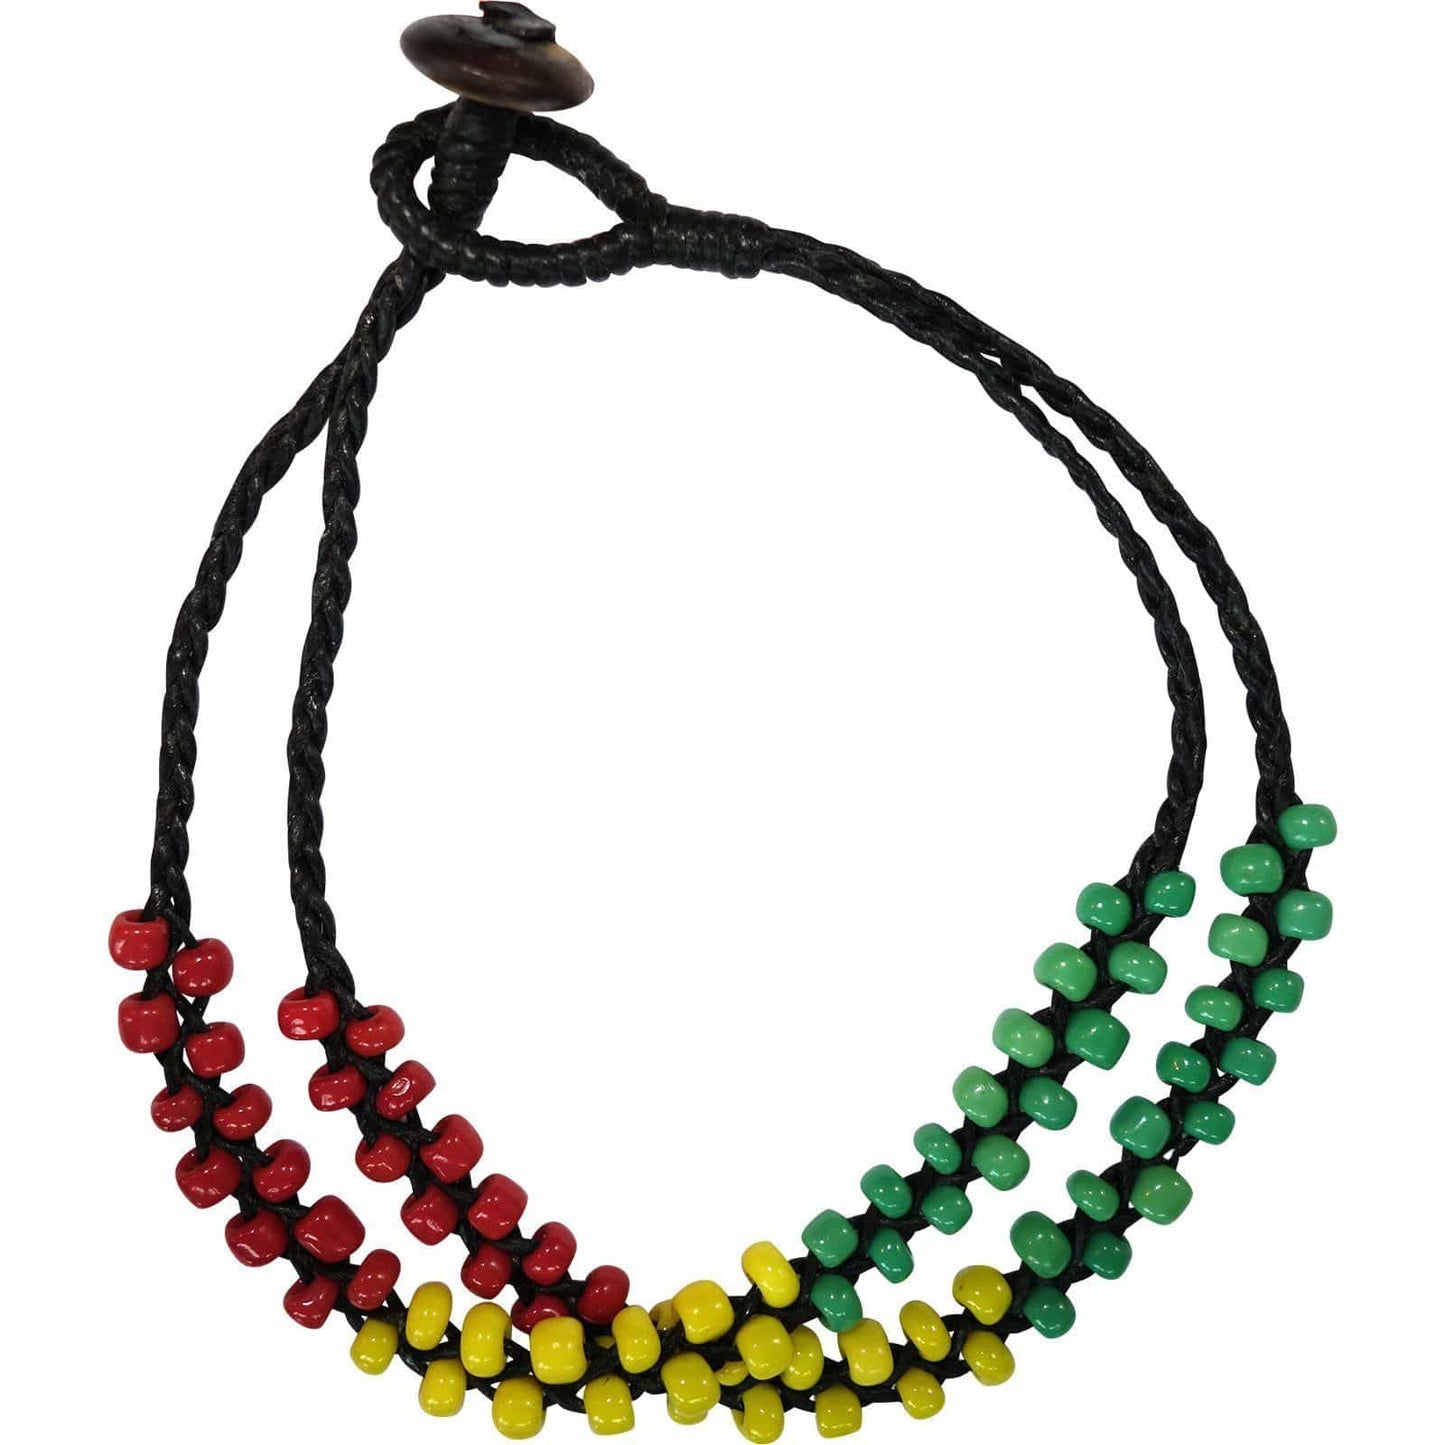 Reggae Beads Ankle Chain Foot Bracelet Anklet Rasta Jewelry Hippie Jewellery